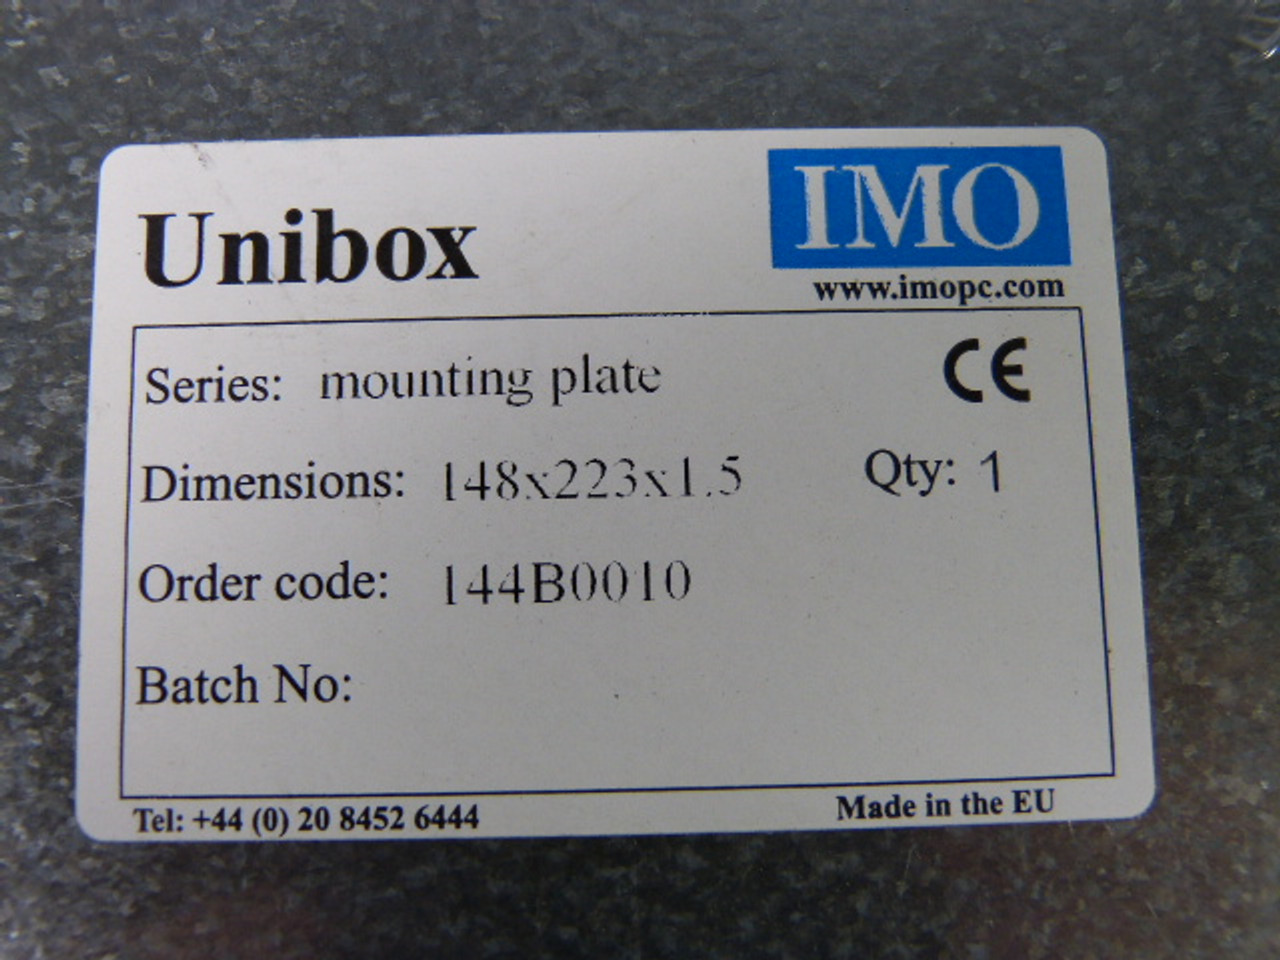 Unibox 144B0010 Mounting Plate 148 x 223 x 1.5 NEW